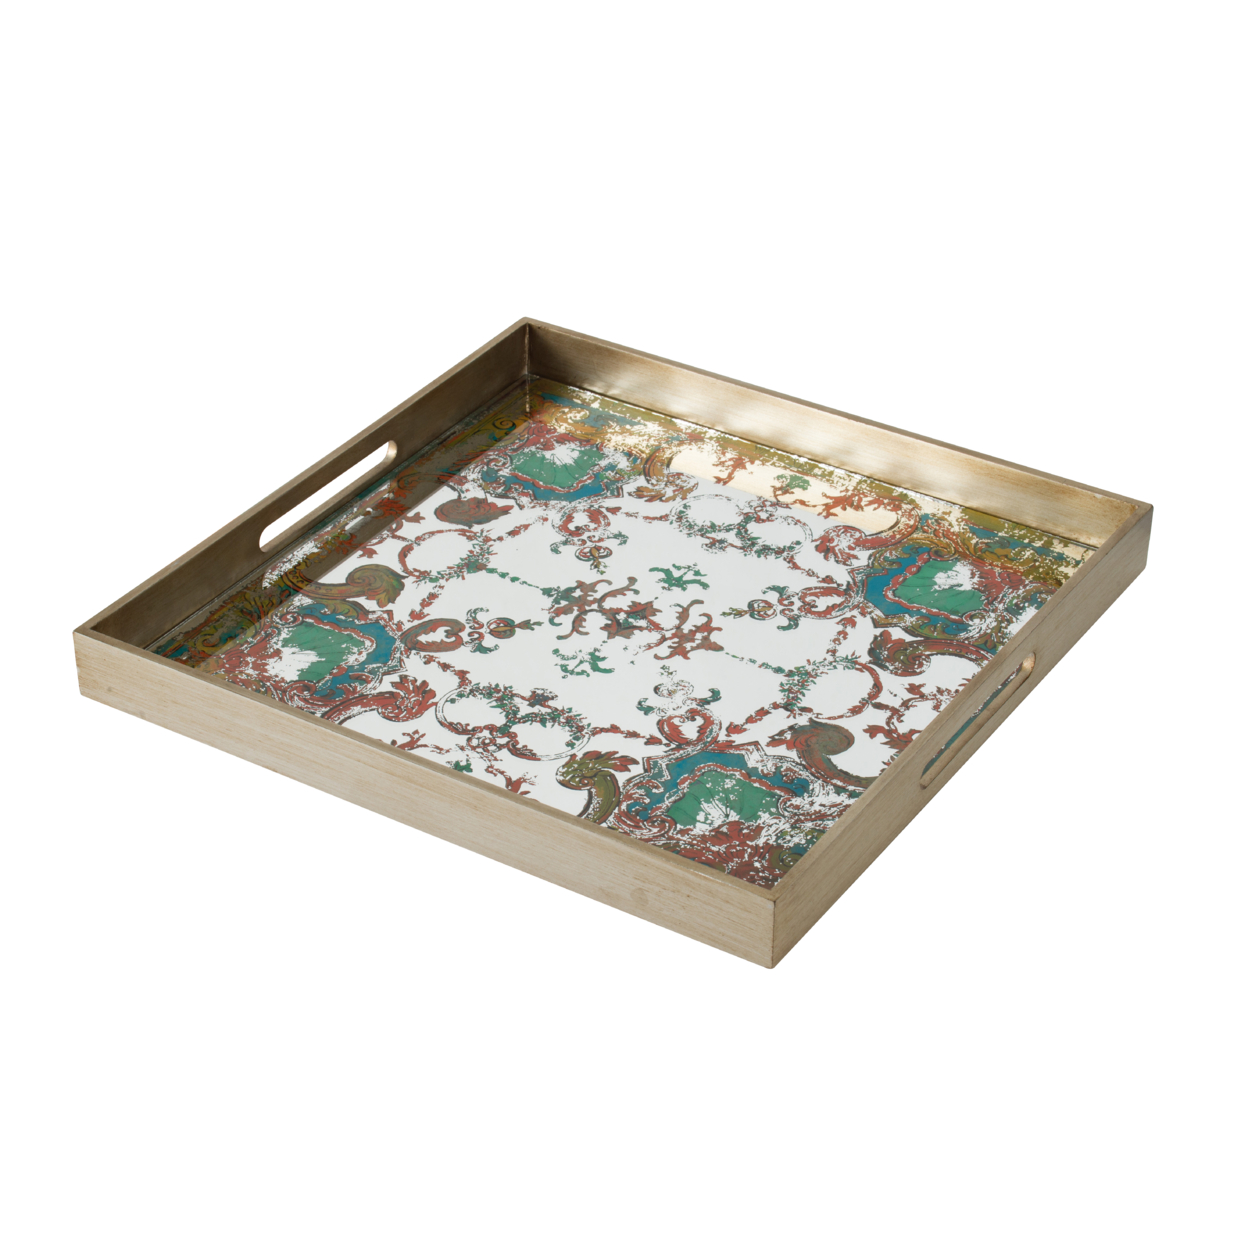 Miki 20 Inch Square Decorative Tray, Artisan Mirrored Damask Pattern, Gold- Saltoro Sherpi